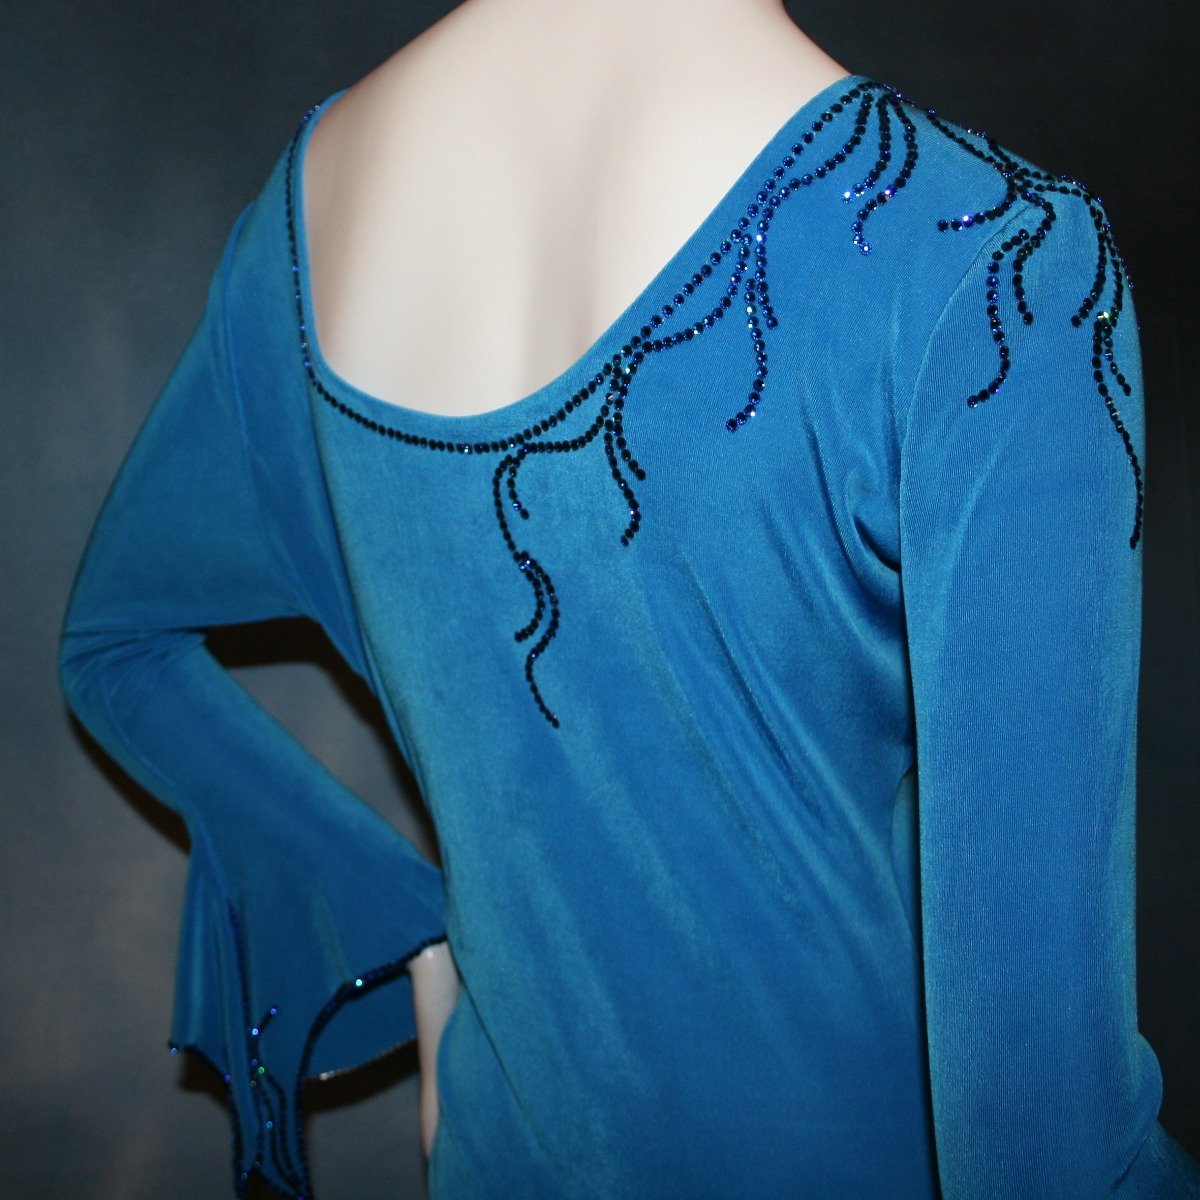 Crystal's Creations close up view of blue Latin/rhythm dress created of luxurious blue slinky, embellished with Swarovski detailed rhinestone work